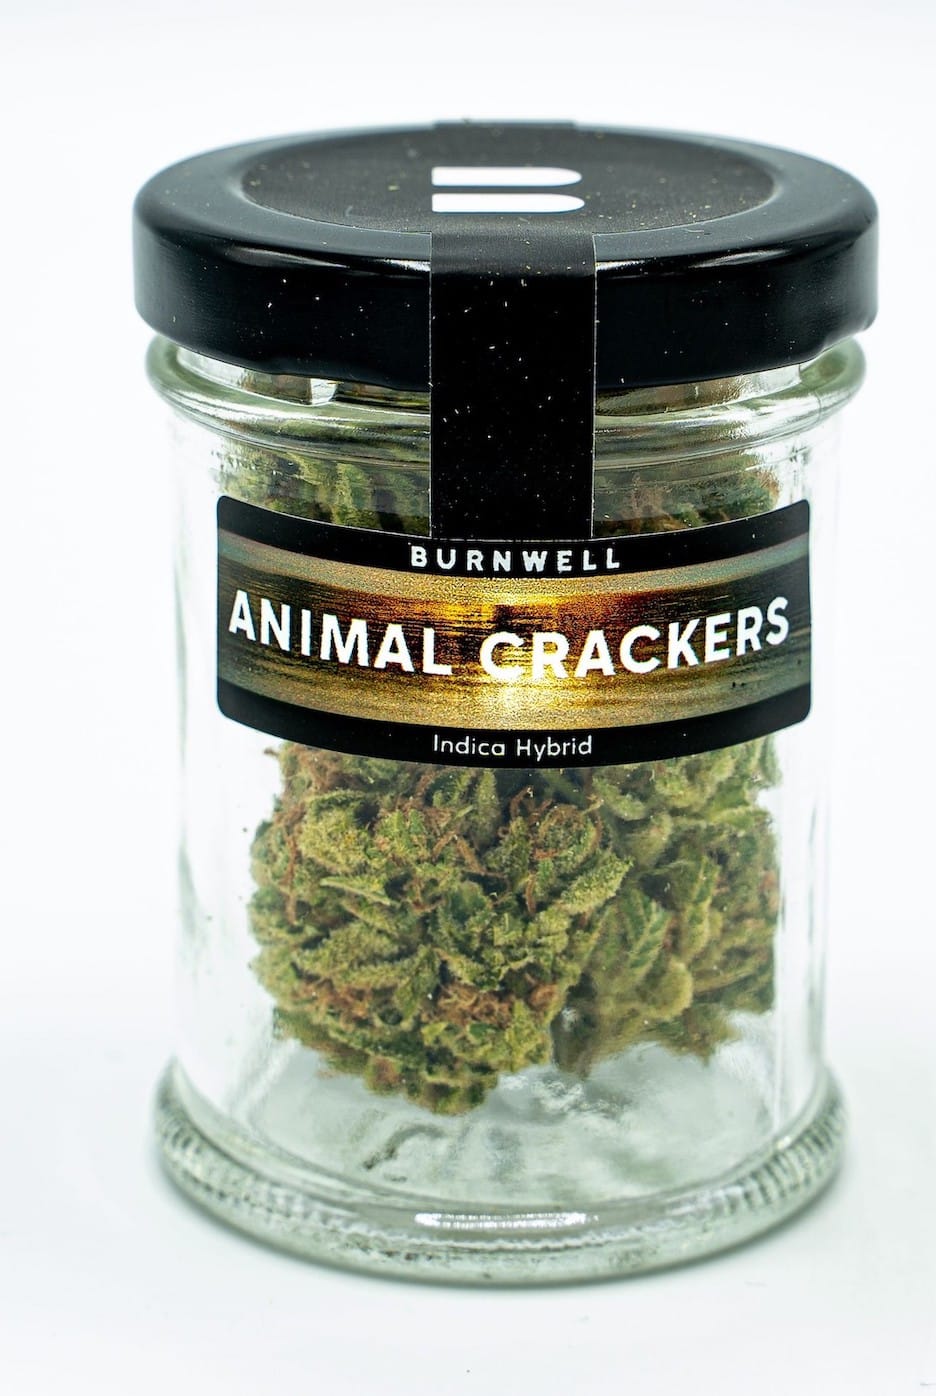 Animal Crackers Cannabis Strain from Burnwell